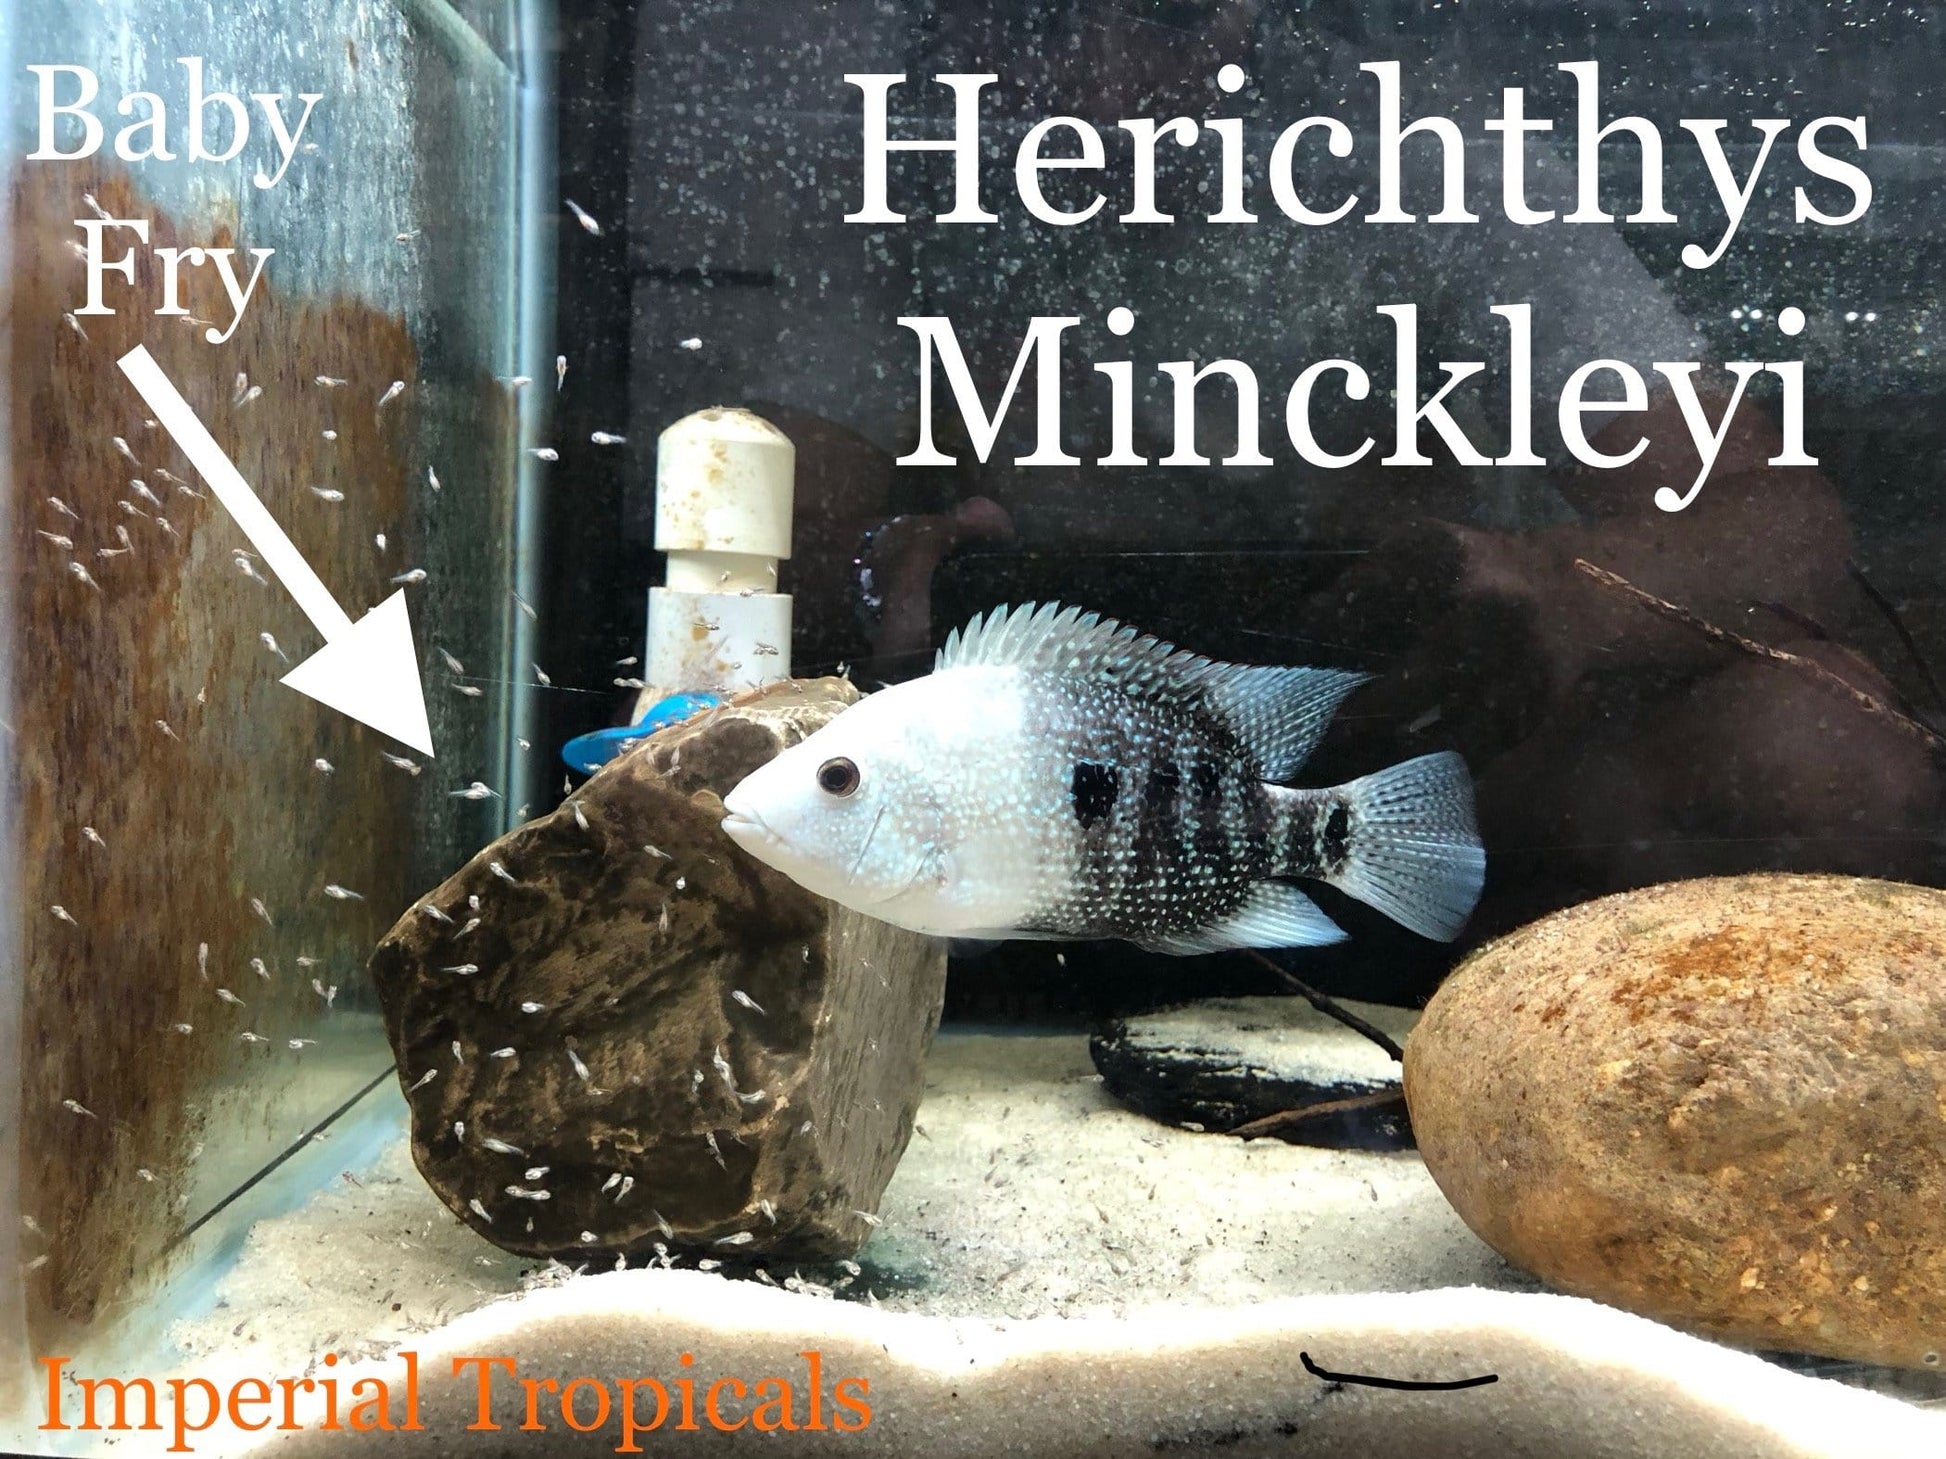 Cuatro Cienegas Cichlid (Herichthys minckleyi) - Imperial Tropicals